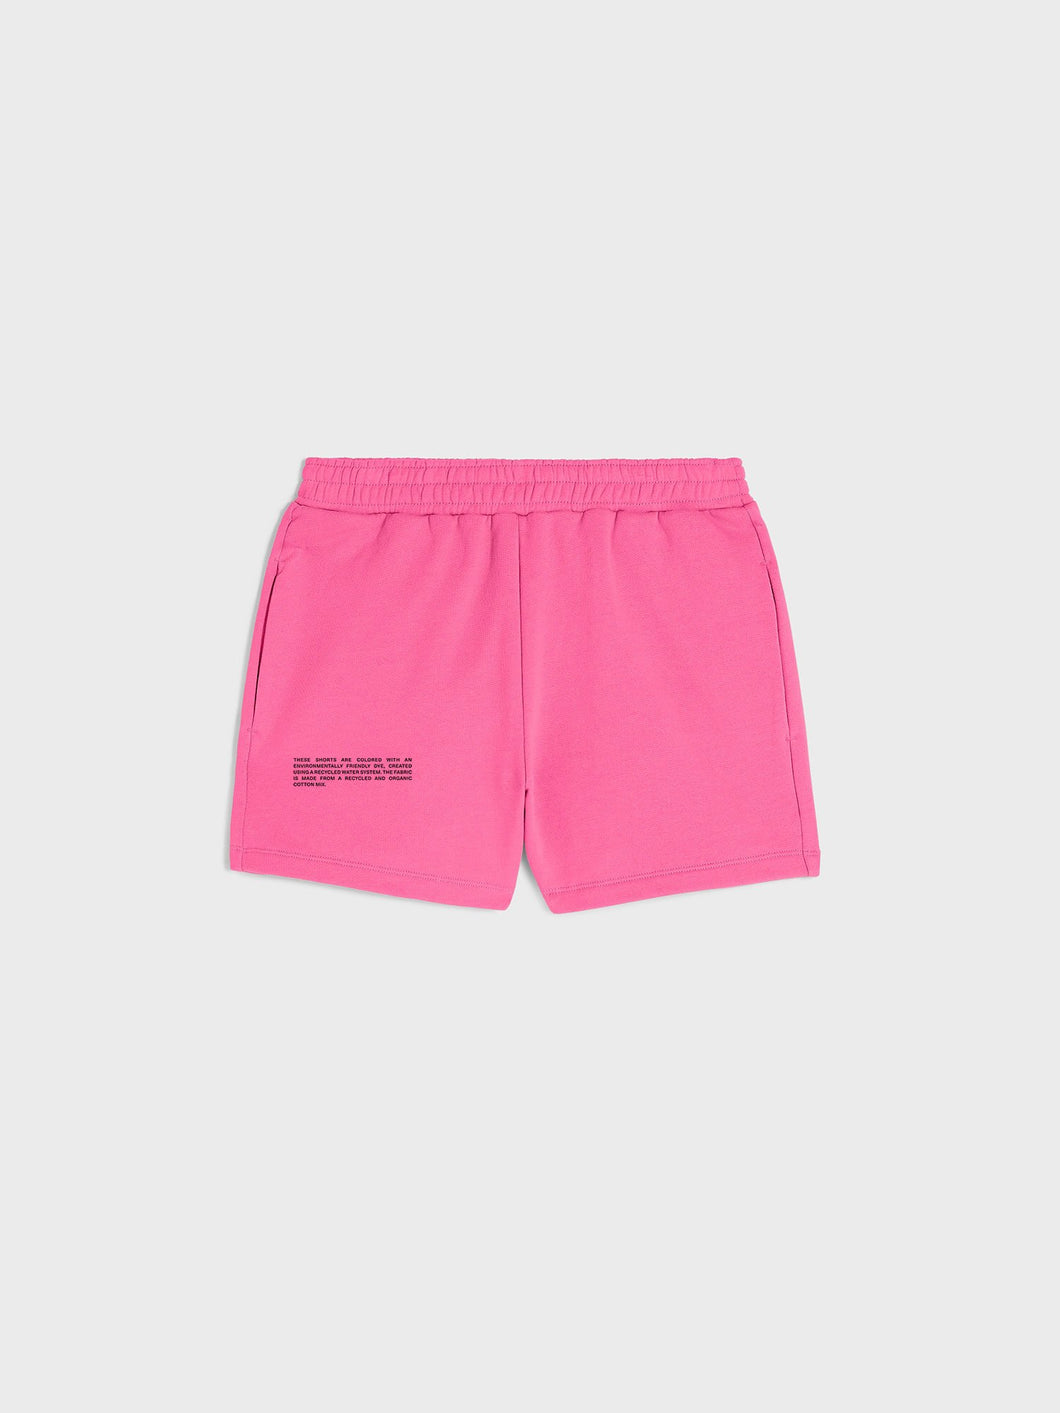 Flamingo Pink shorts